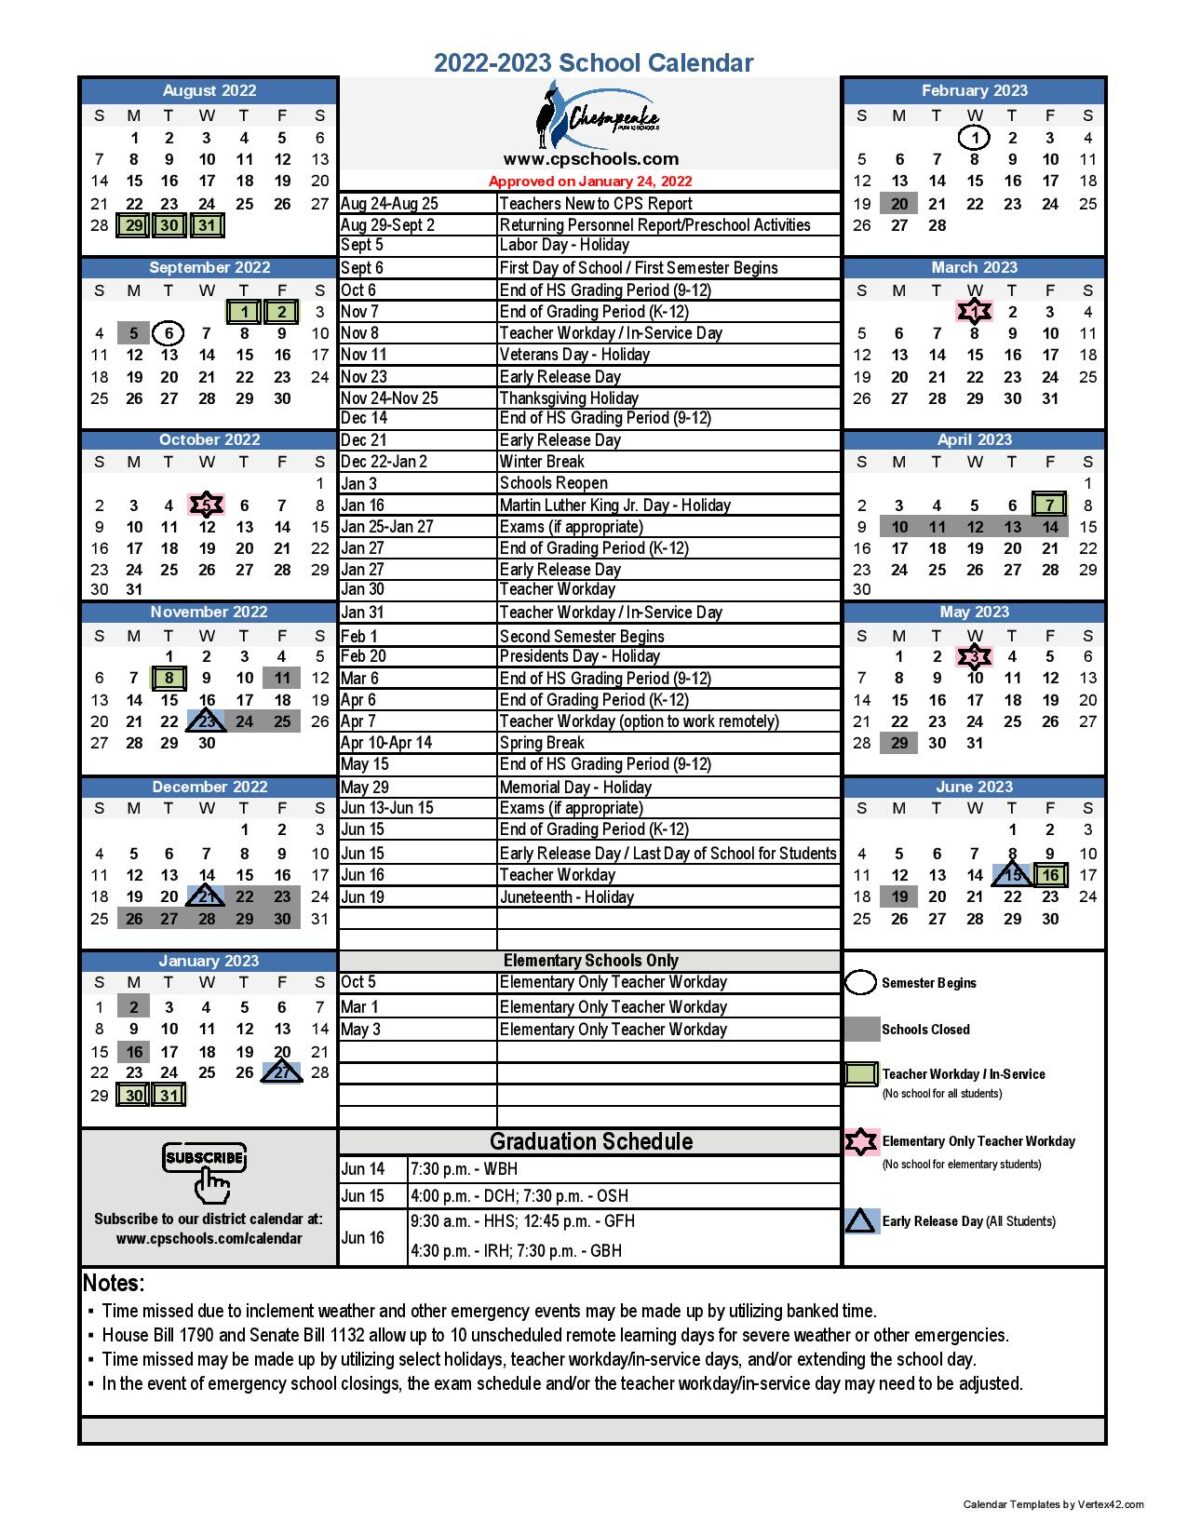 Chesapeake Public Schools Calendar 202223